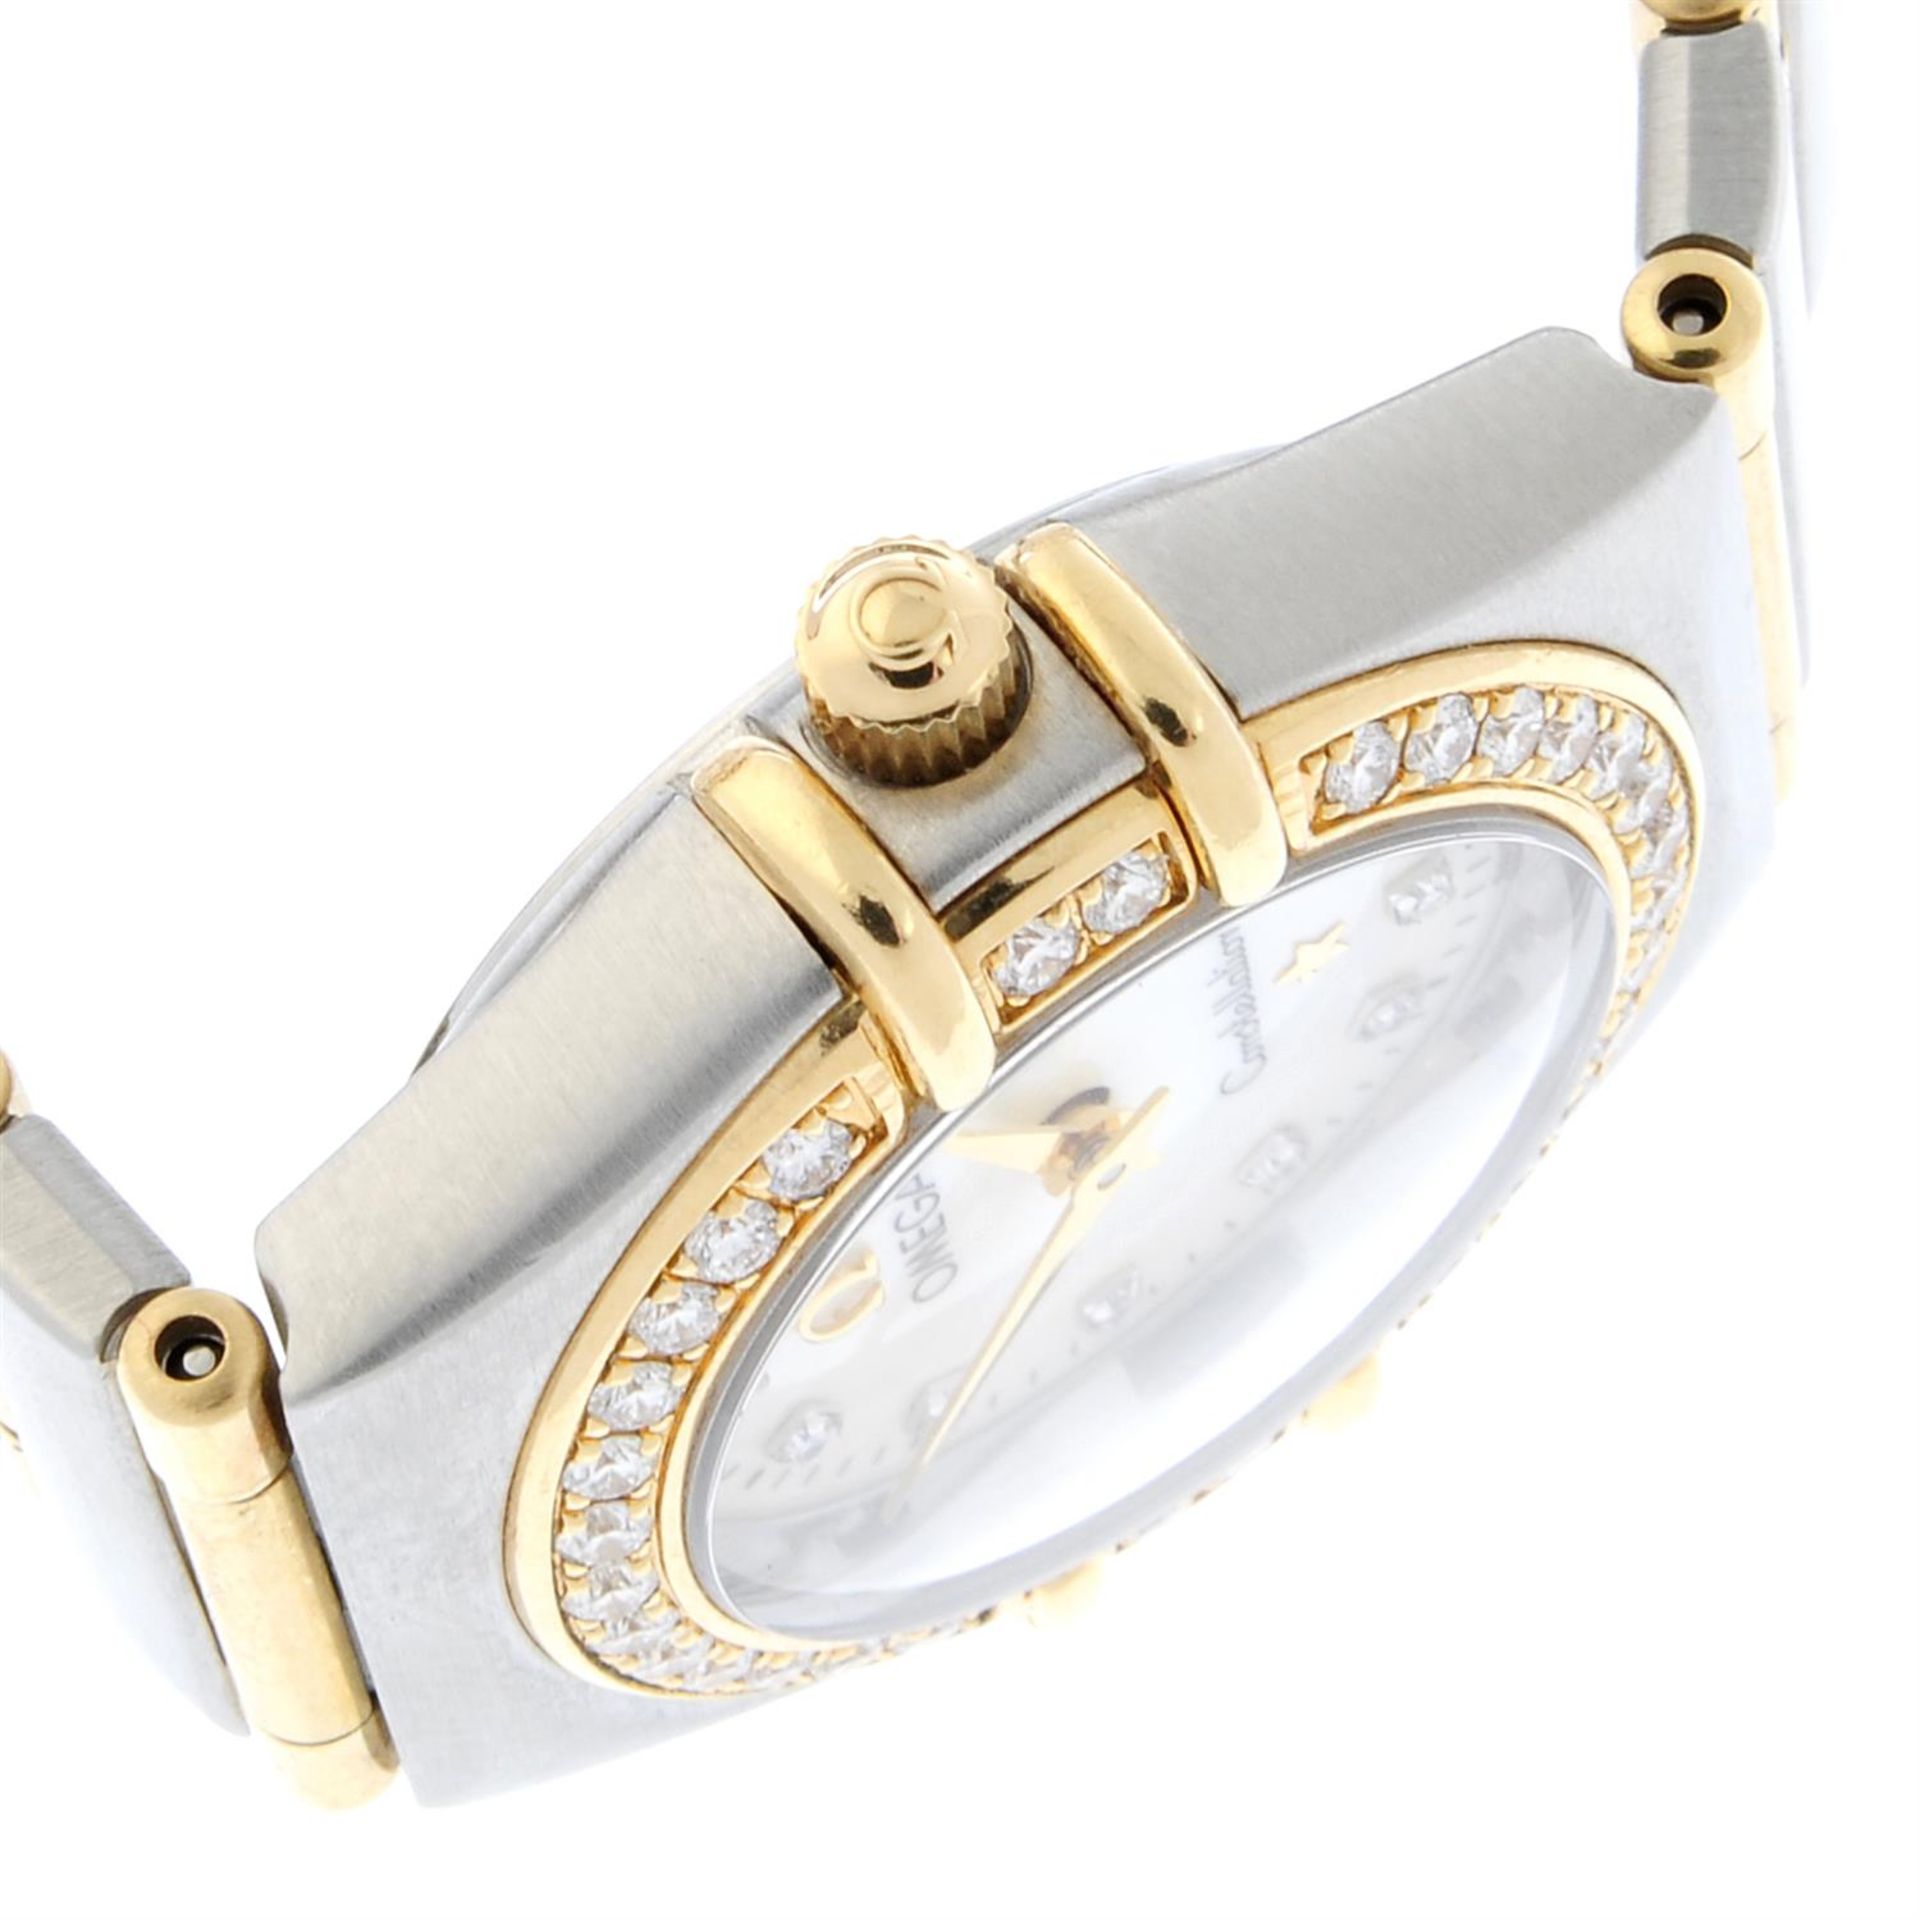 OMEGA - a factory diamond set bi-metal Constellation bracelet watch, 22.5mm - Image 3 of 5